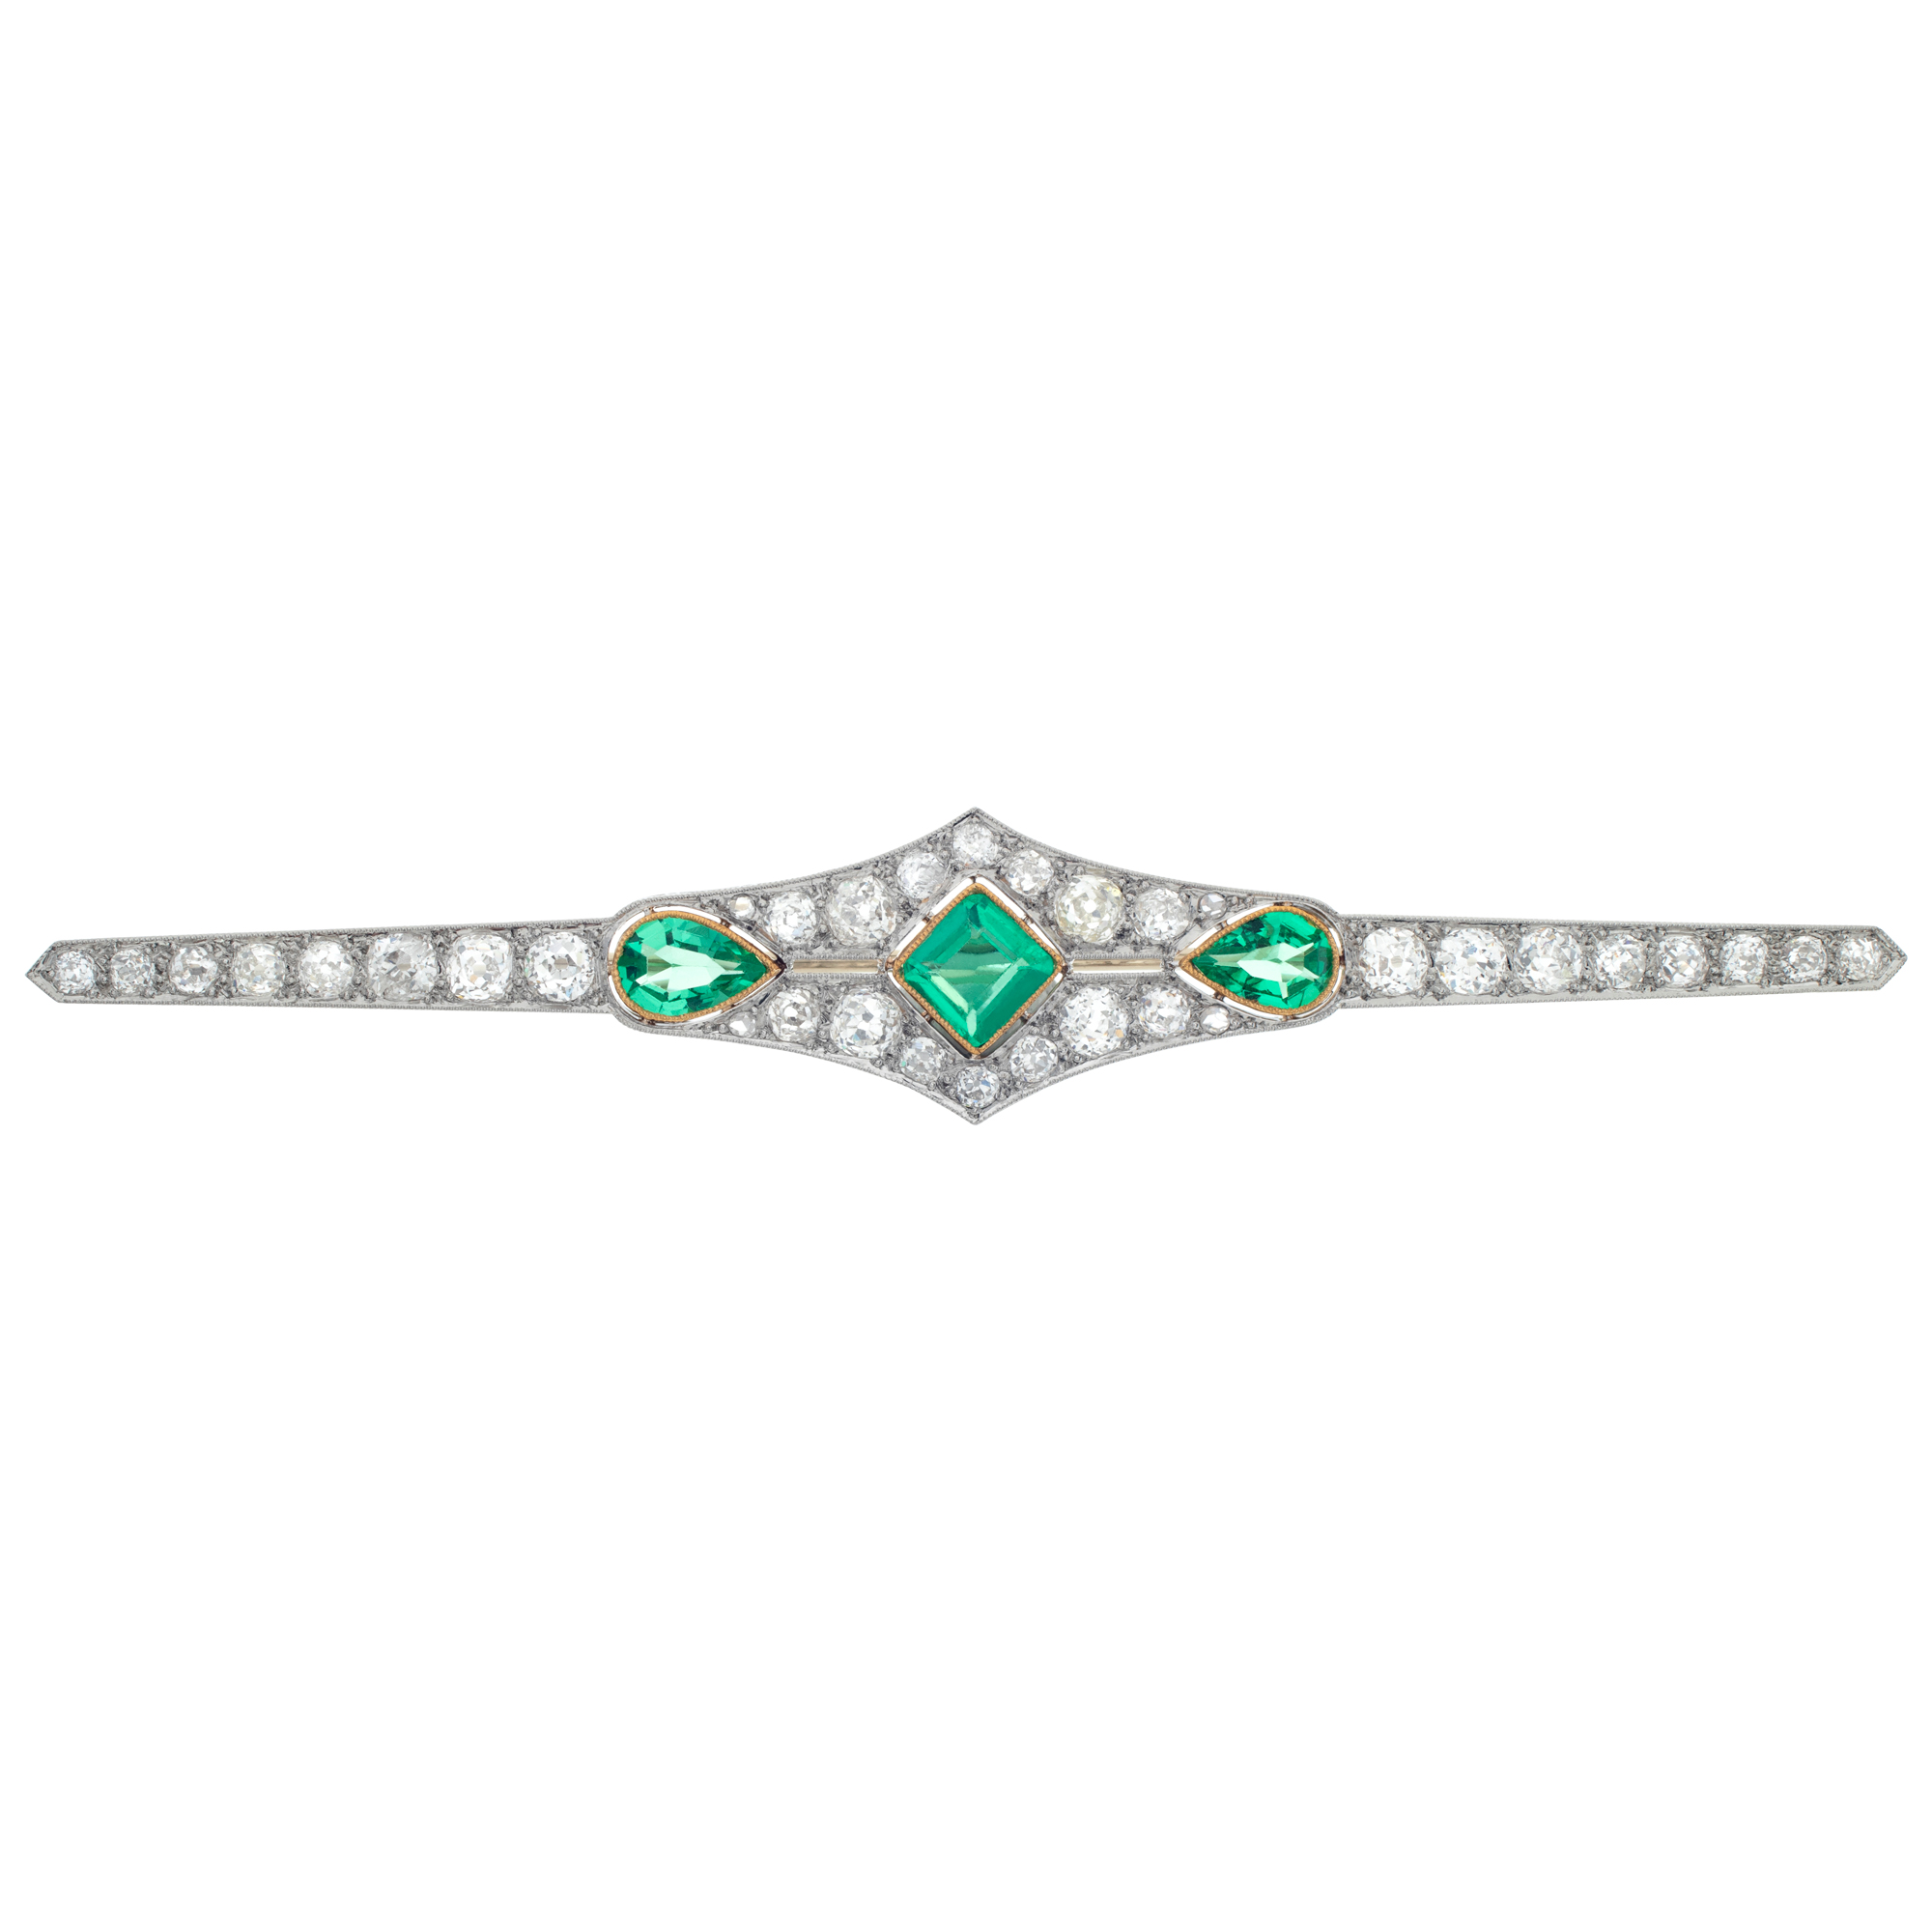 Diamonds & Emerald pin set in 18k white gold